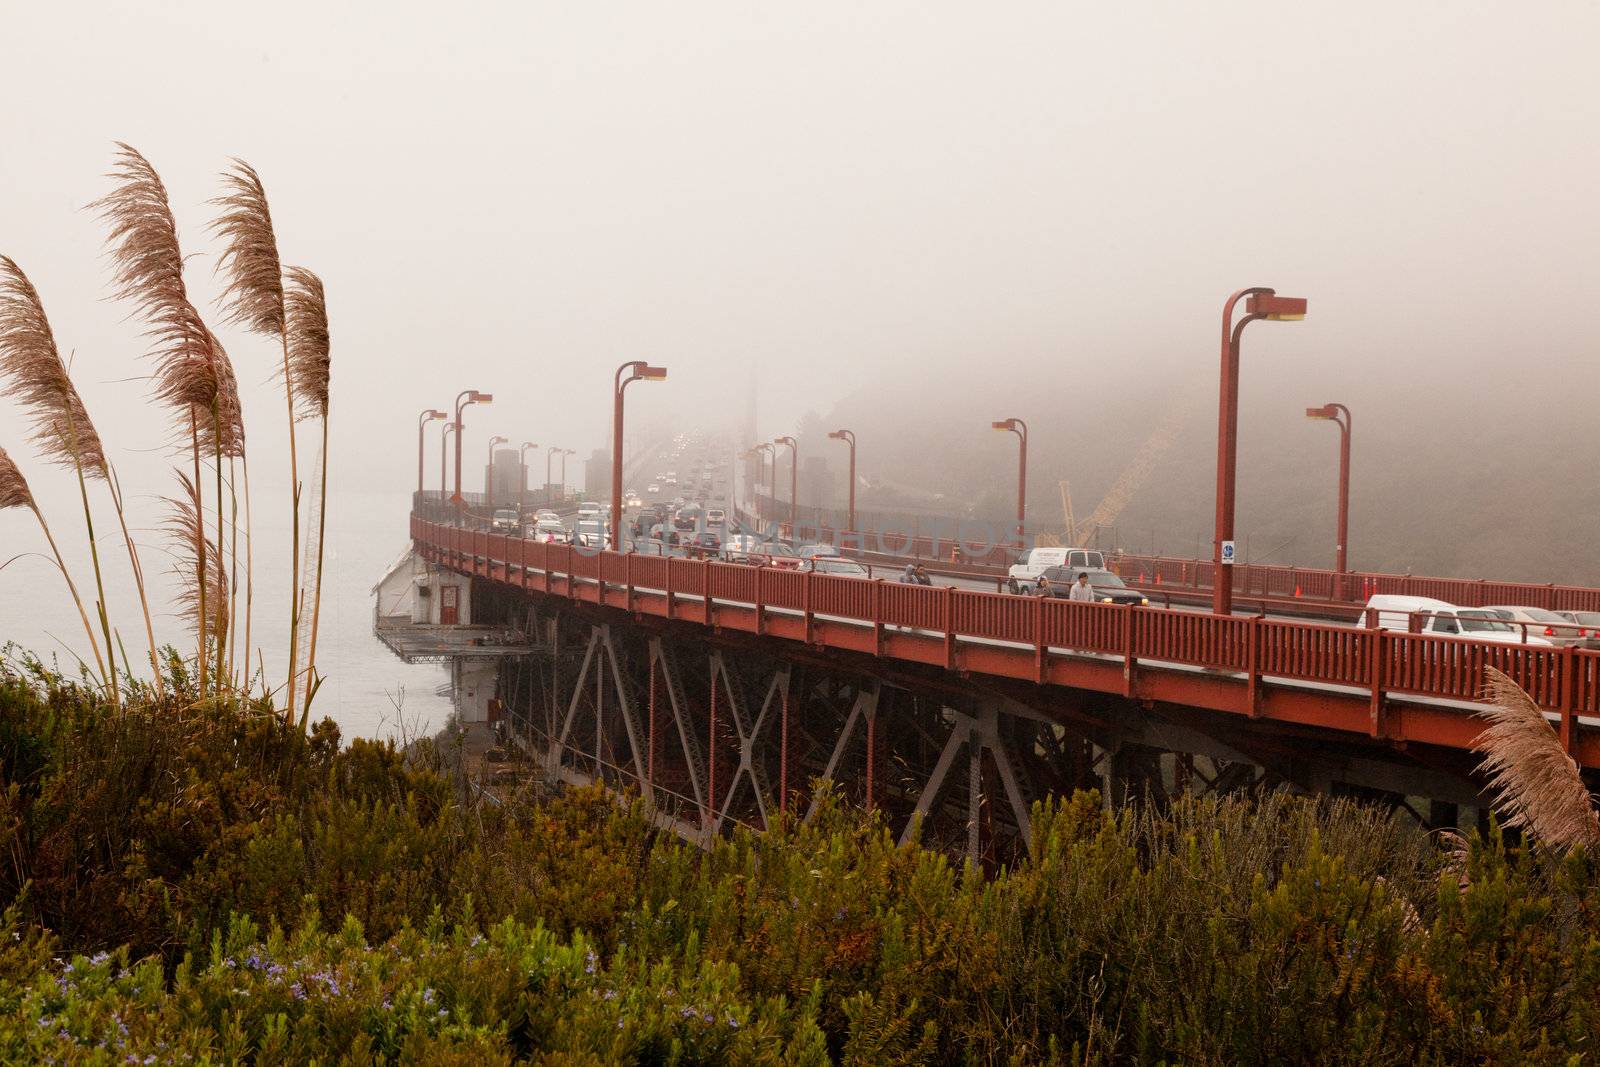 Golden Gate Bridge Vista Point in Sausalito, CA